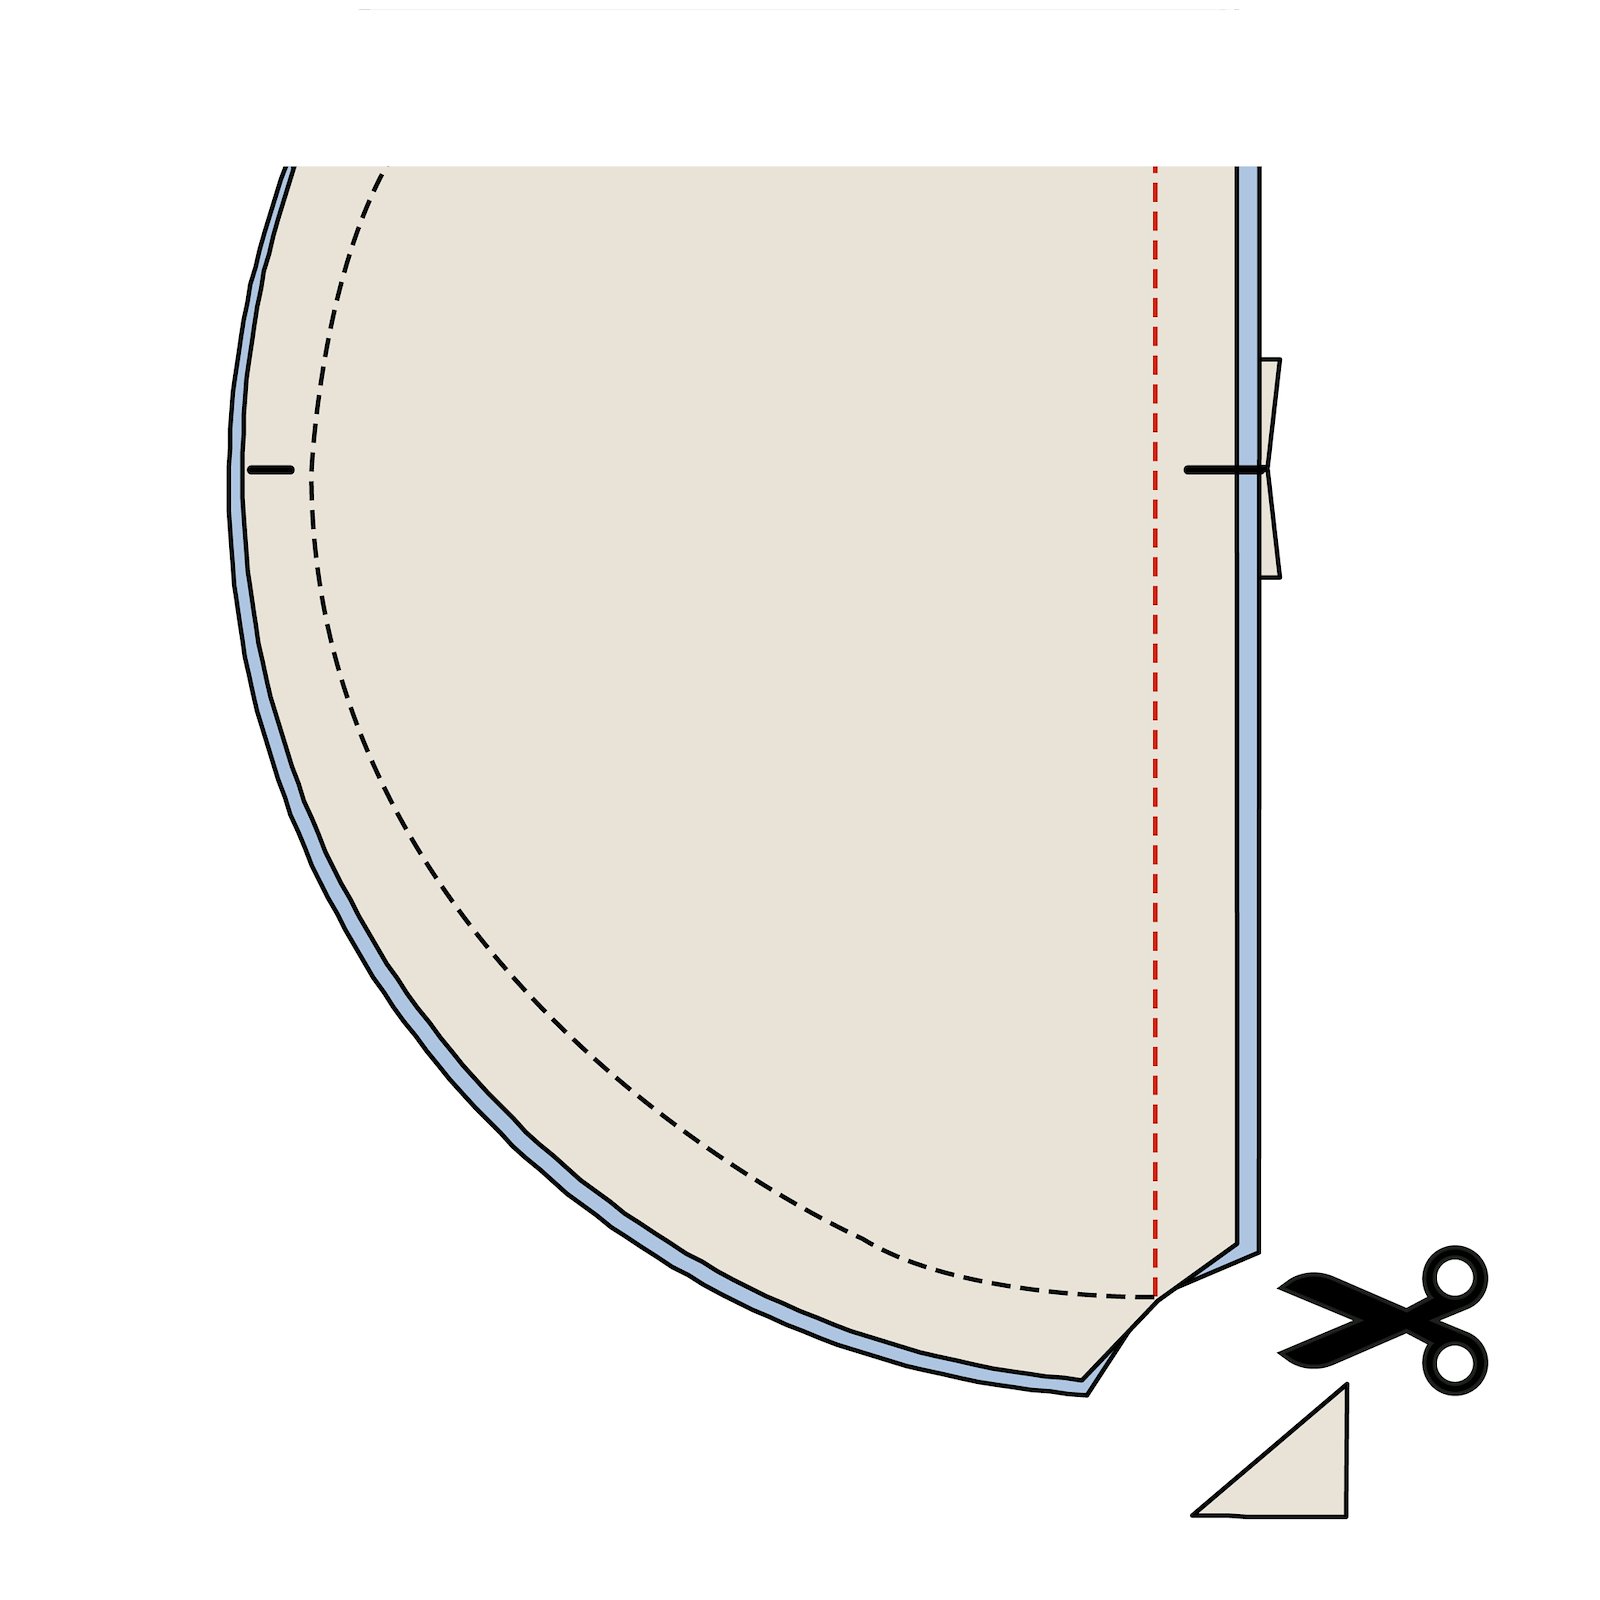 Sewing pattern: Headrest cushion cover DIY5021-step7.jpg